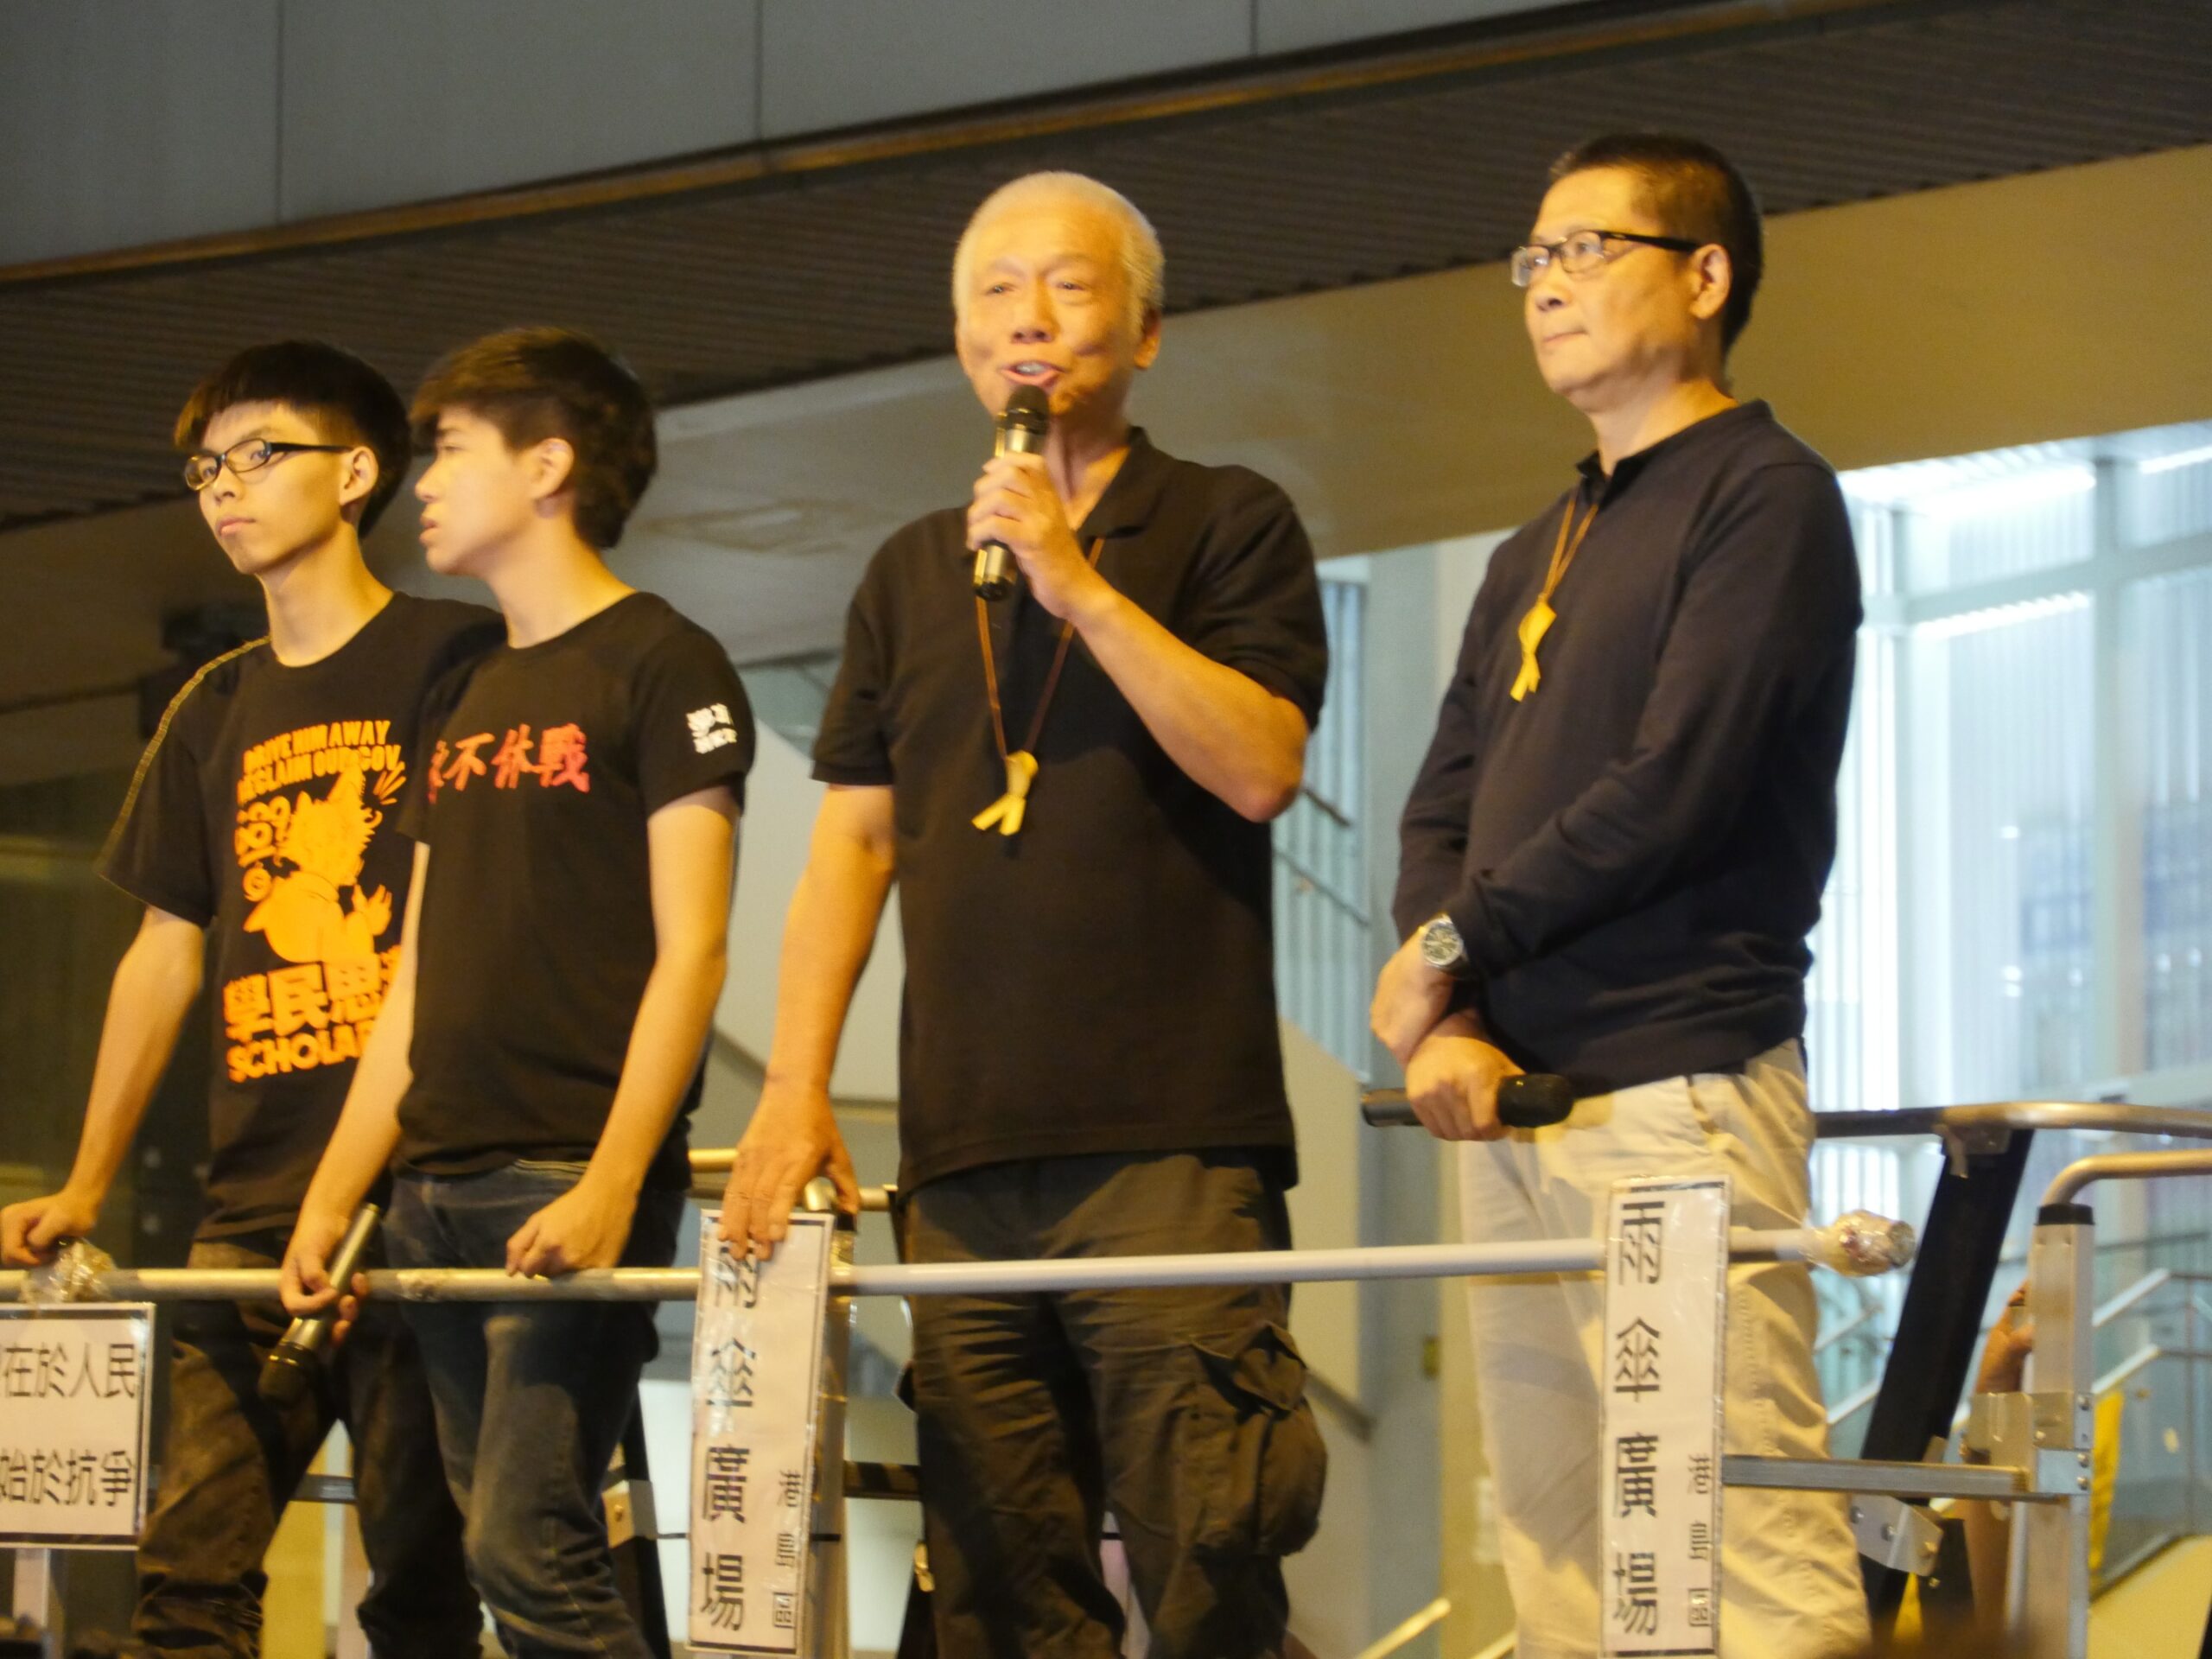 Occupy Hong Kong organizers Joshua Wong, Lester Shum, Chu Yiu-Ming, and Chan Kin-Man speak in front of a crowd.